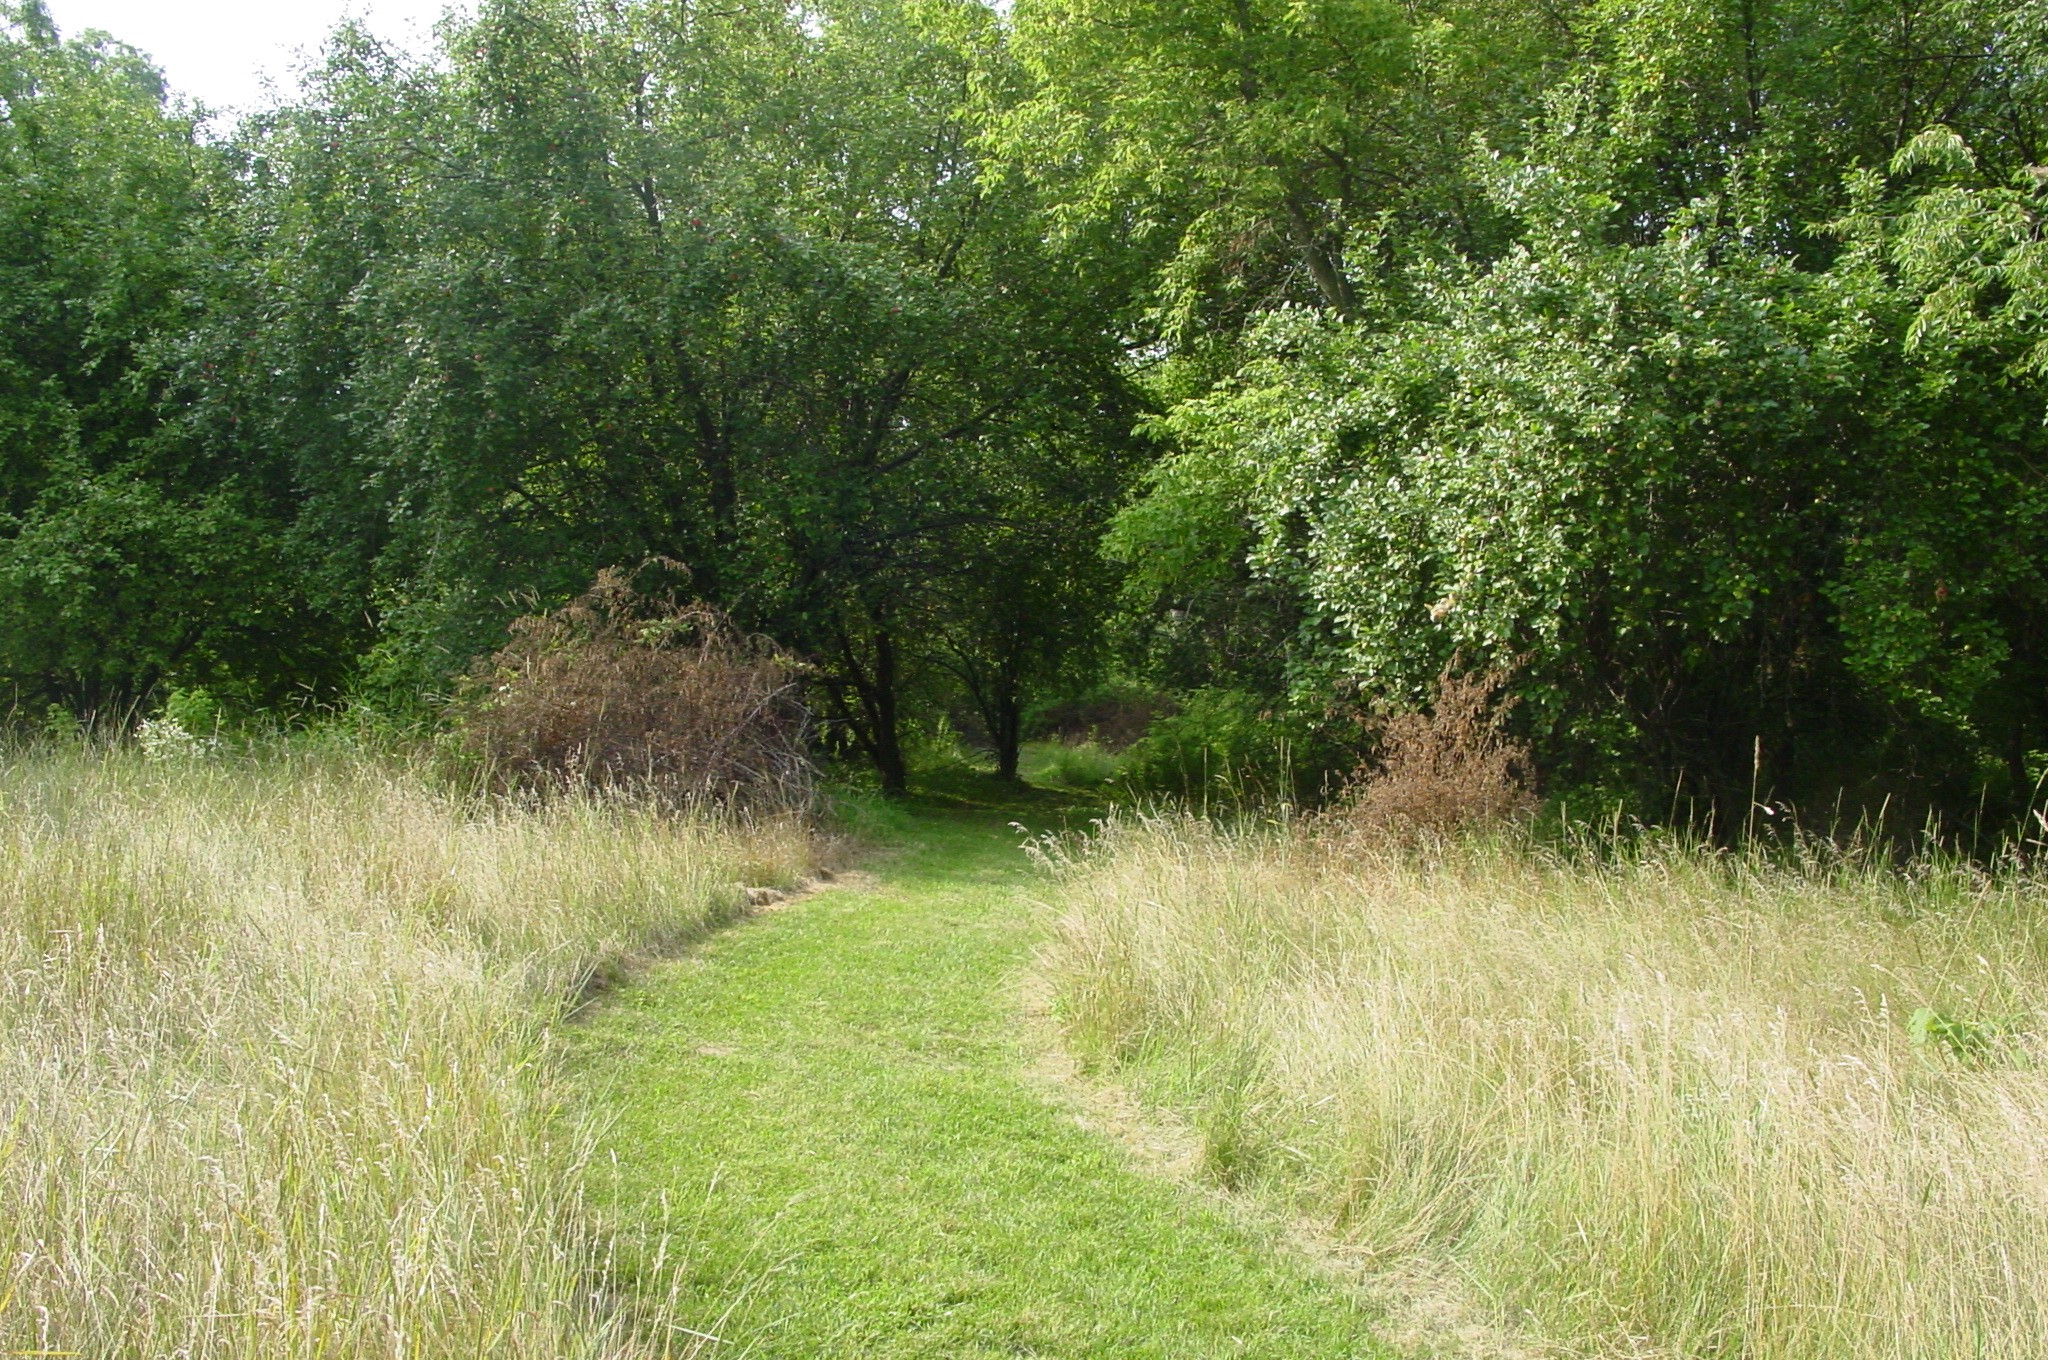 grassy trail leading into the treeline